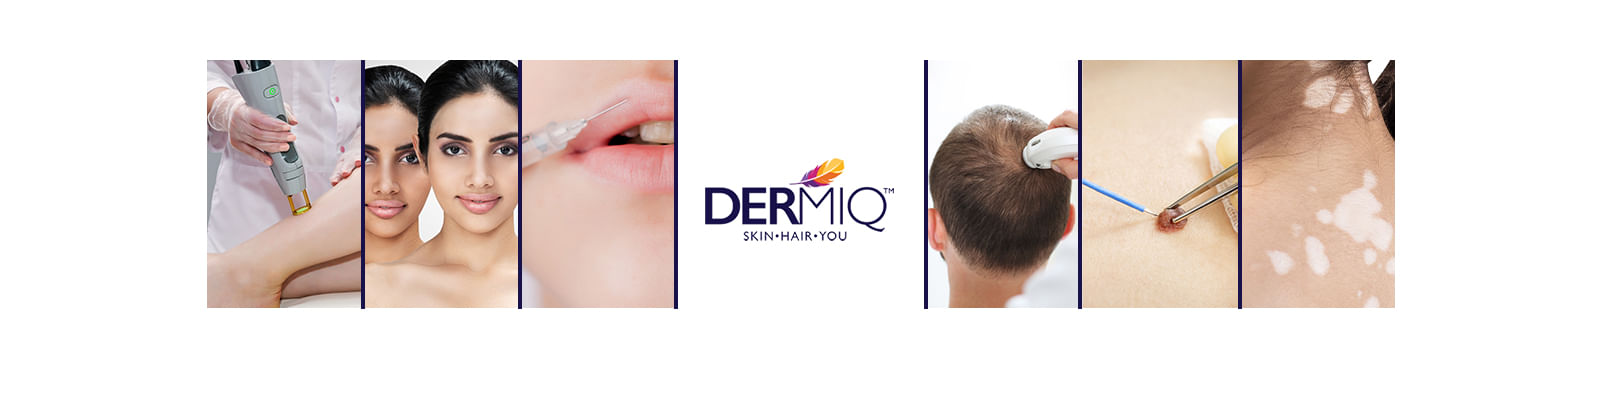 DERMIQ Advanced Dermatology, Cosmetology & Trichology Center